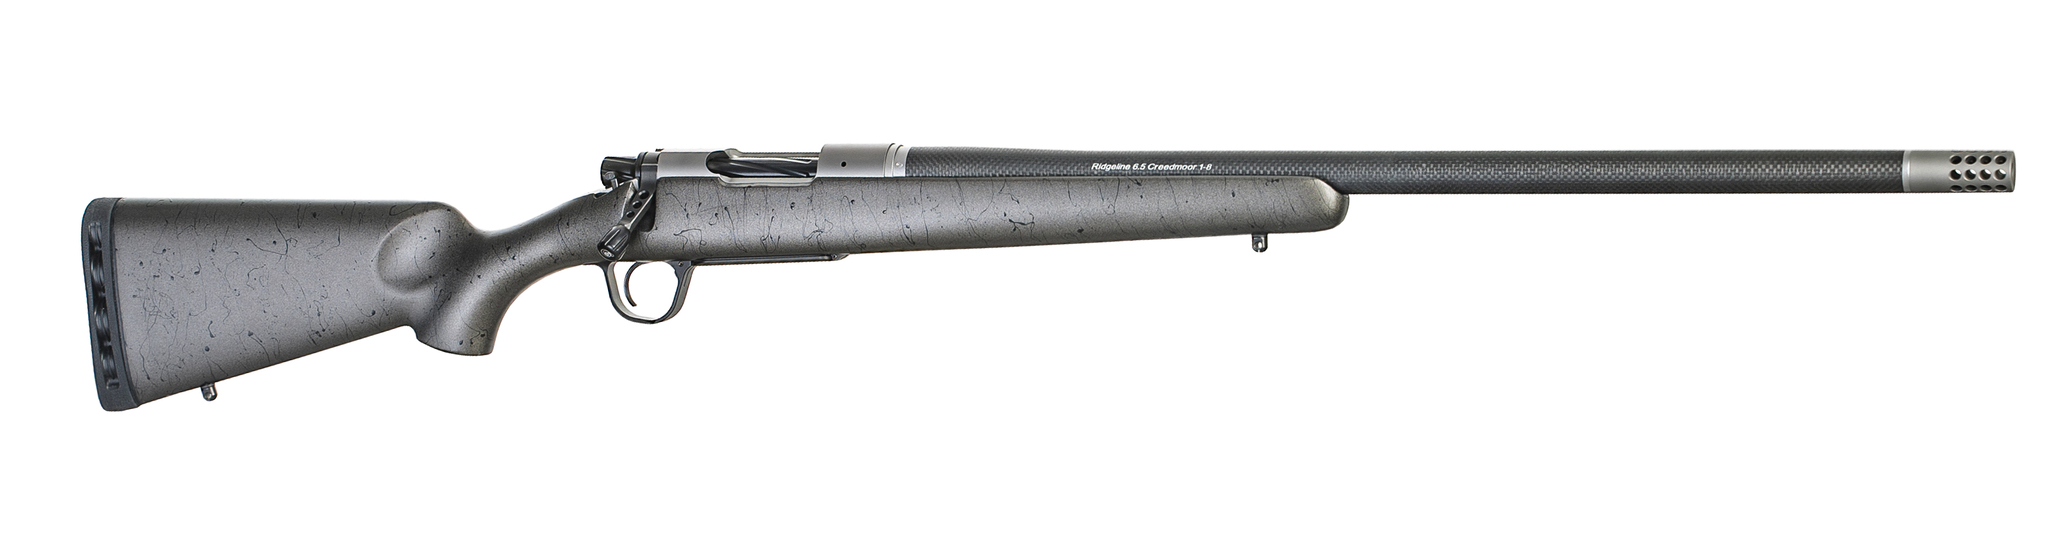 Christensen Arms Ridgeline Titanium 7mm Rem Mag